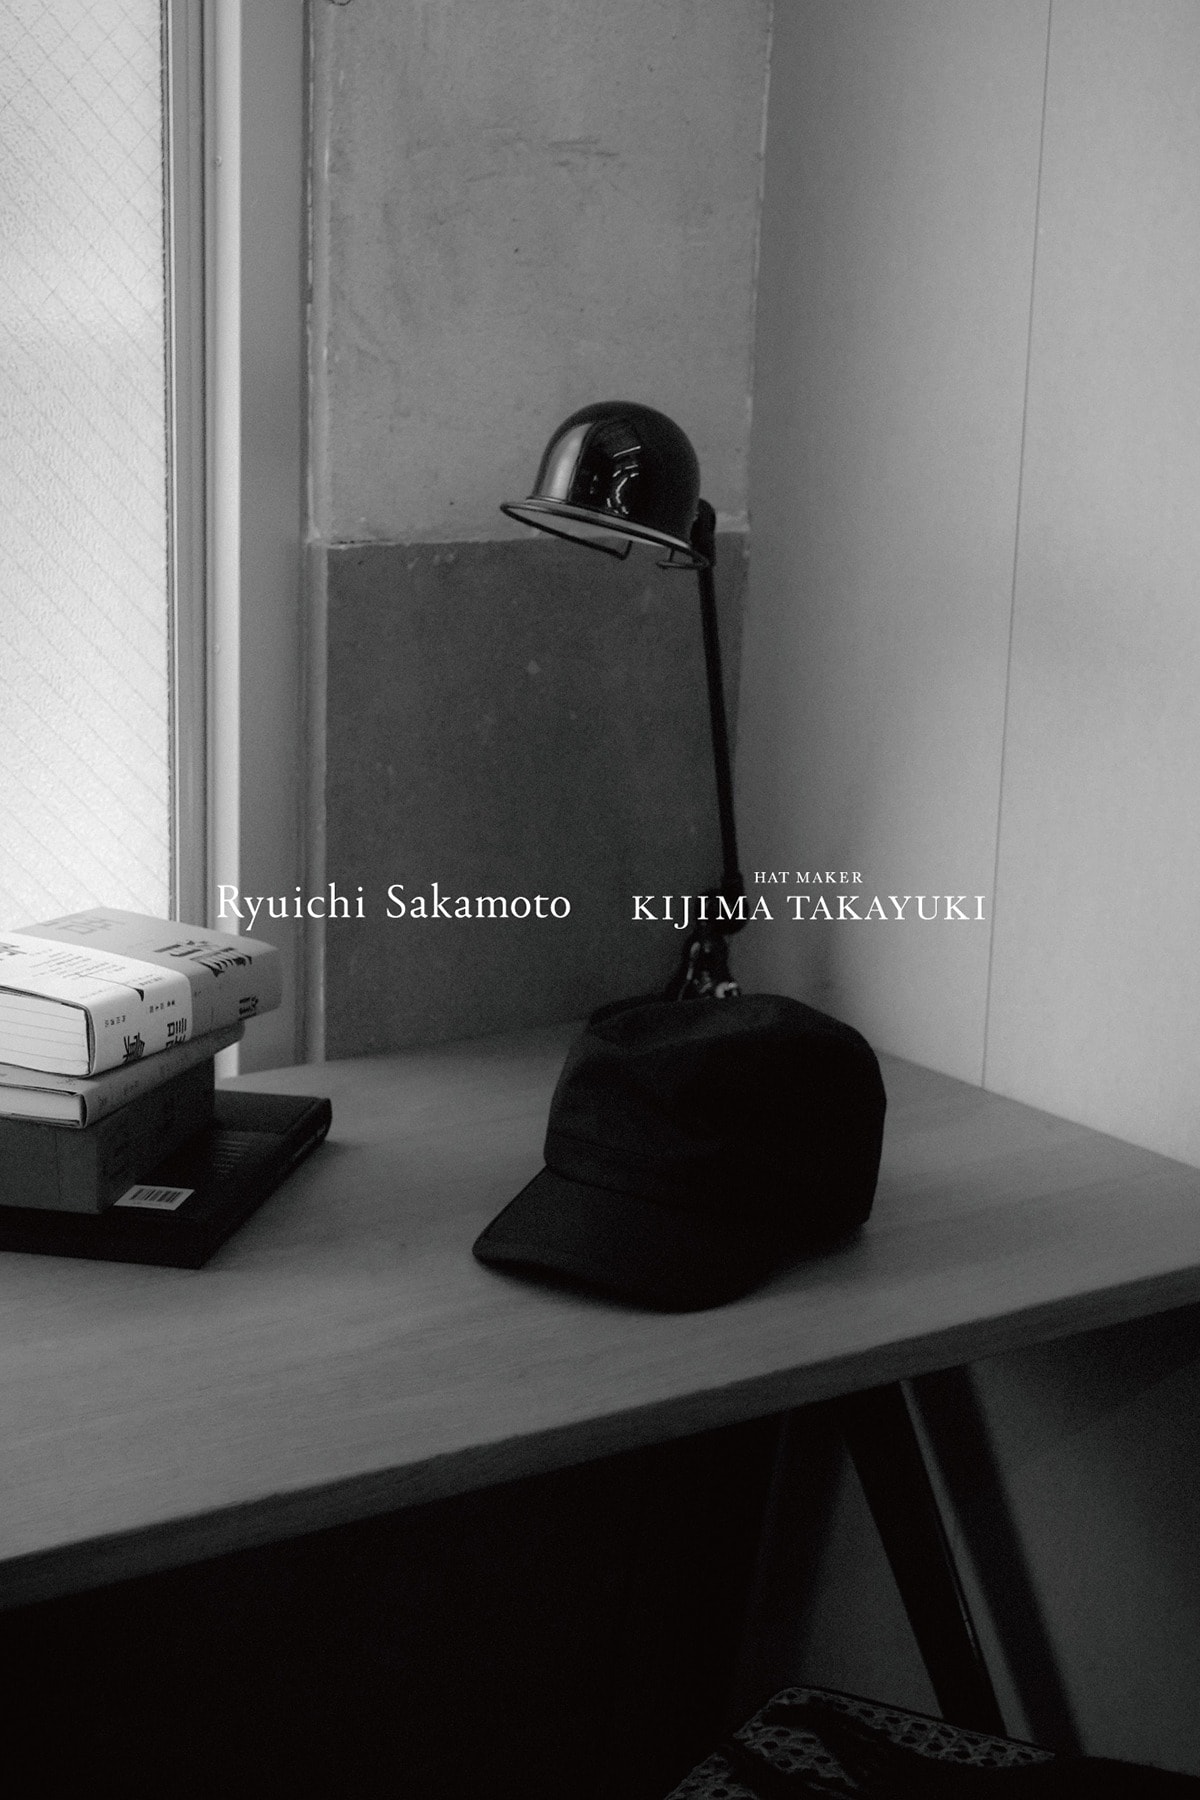 Kijima Takayuki 正式推出 WORK CAP for Ryuichi Sakamoto 全新帽款